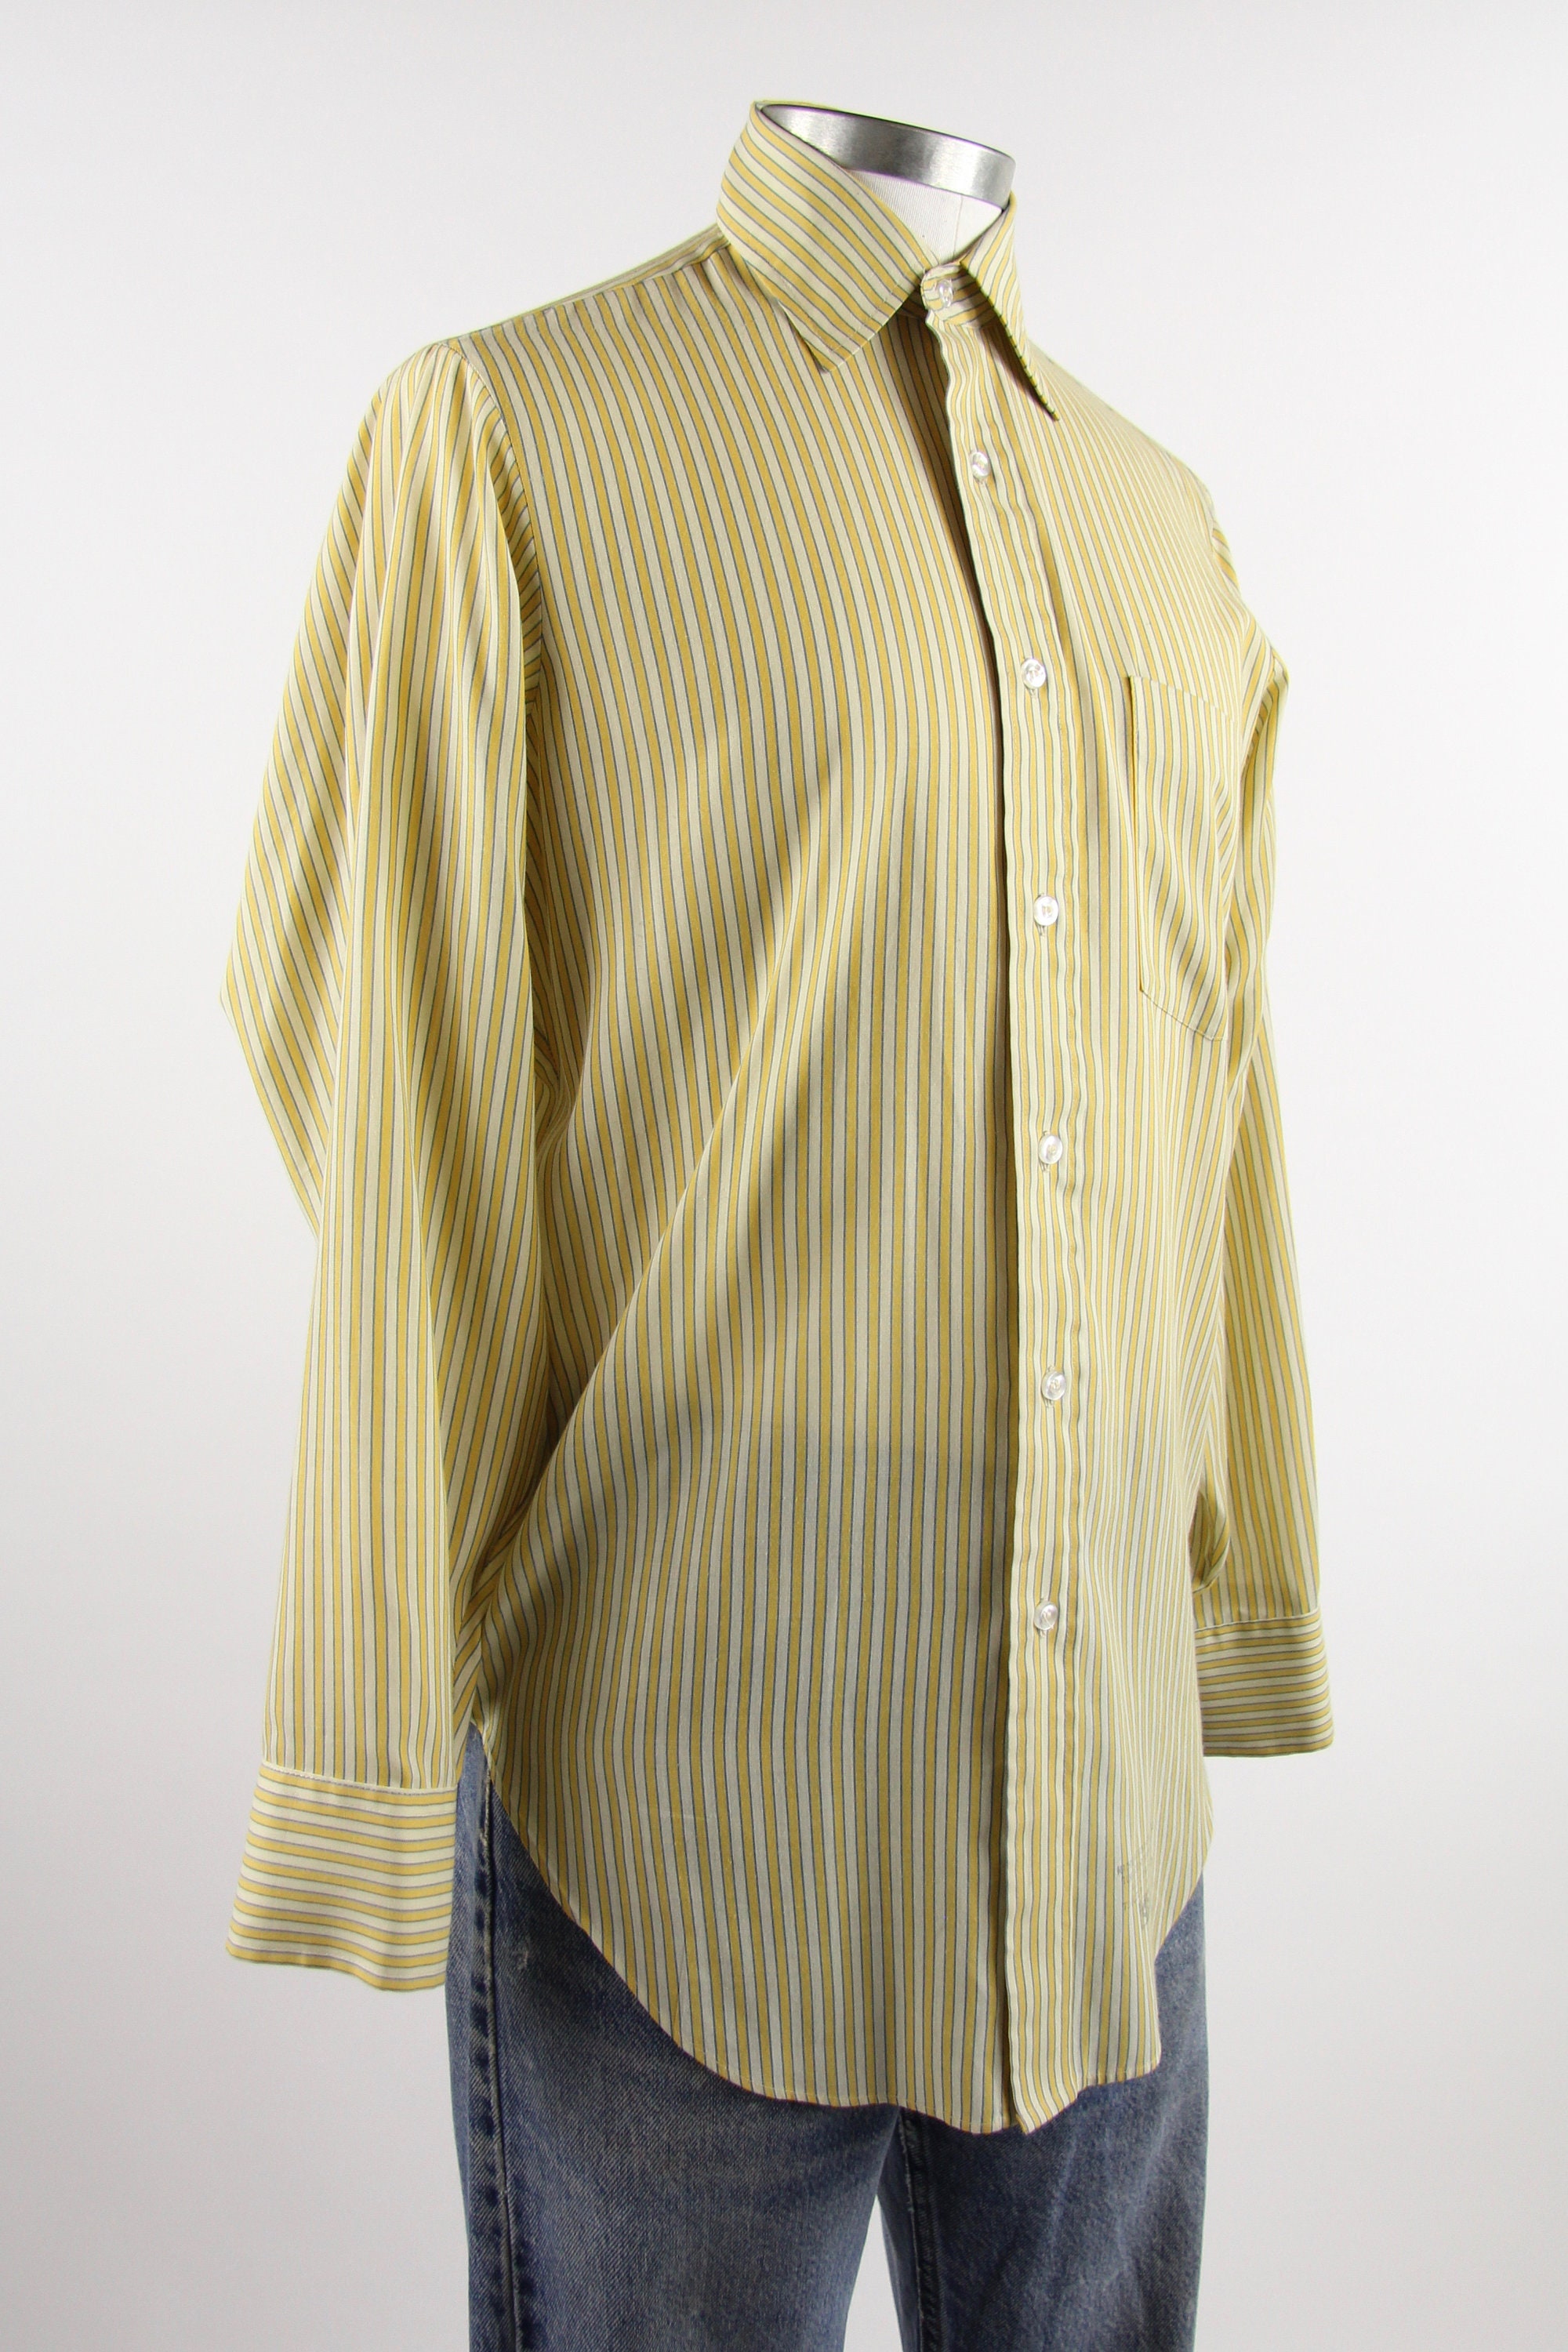 Arrow Men's Shirt Striped Yellow Vintage 60's Soft Button Down Dress ...